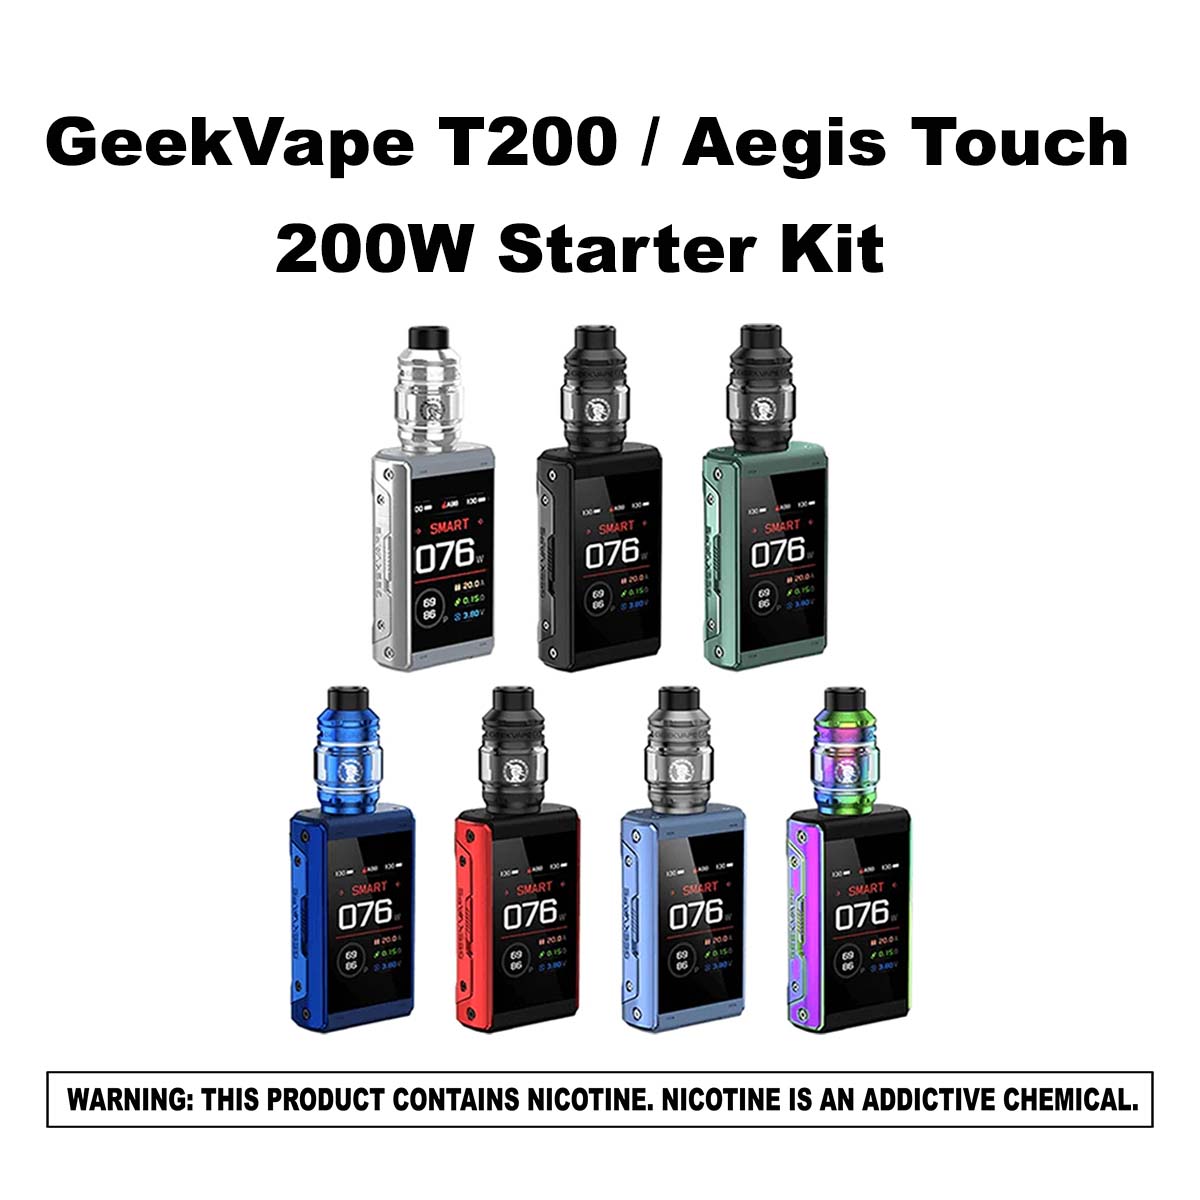 GeekVape T200 / Aegis Touch 200W Starter Kit